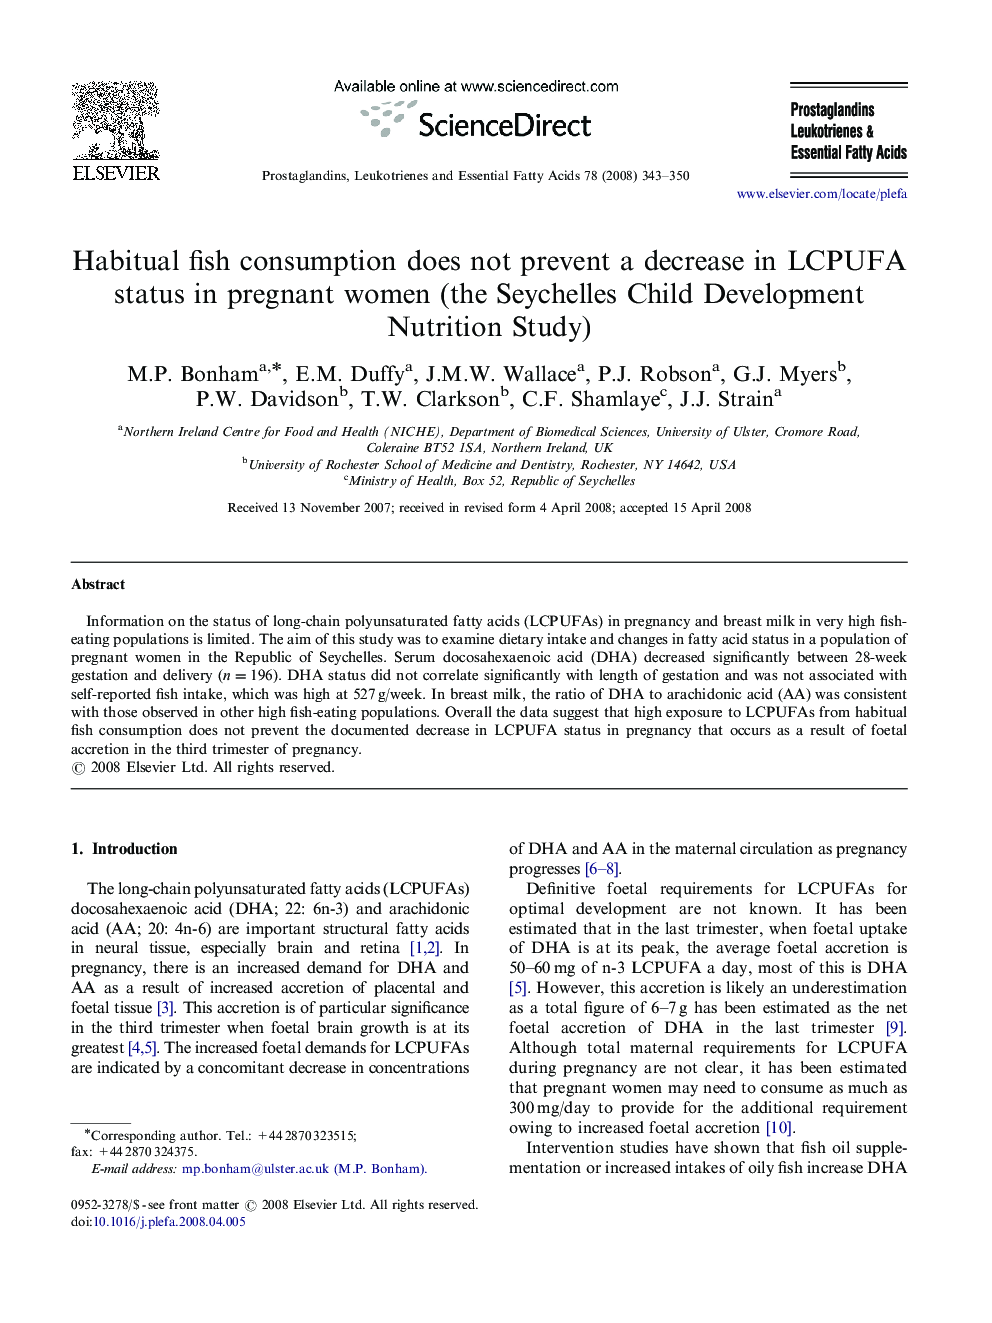 Habitual fish consumption does not prevent a decrease in LCPUFA status in pregnant women (the Seychelles Child Development Nutrition Study)